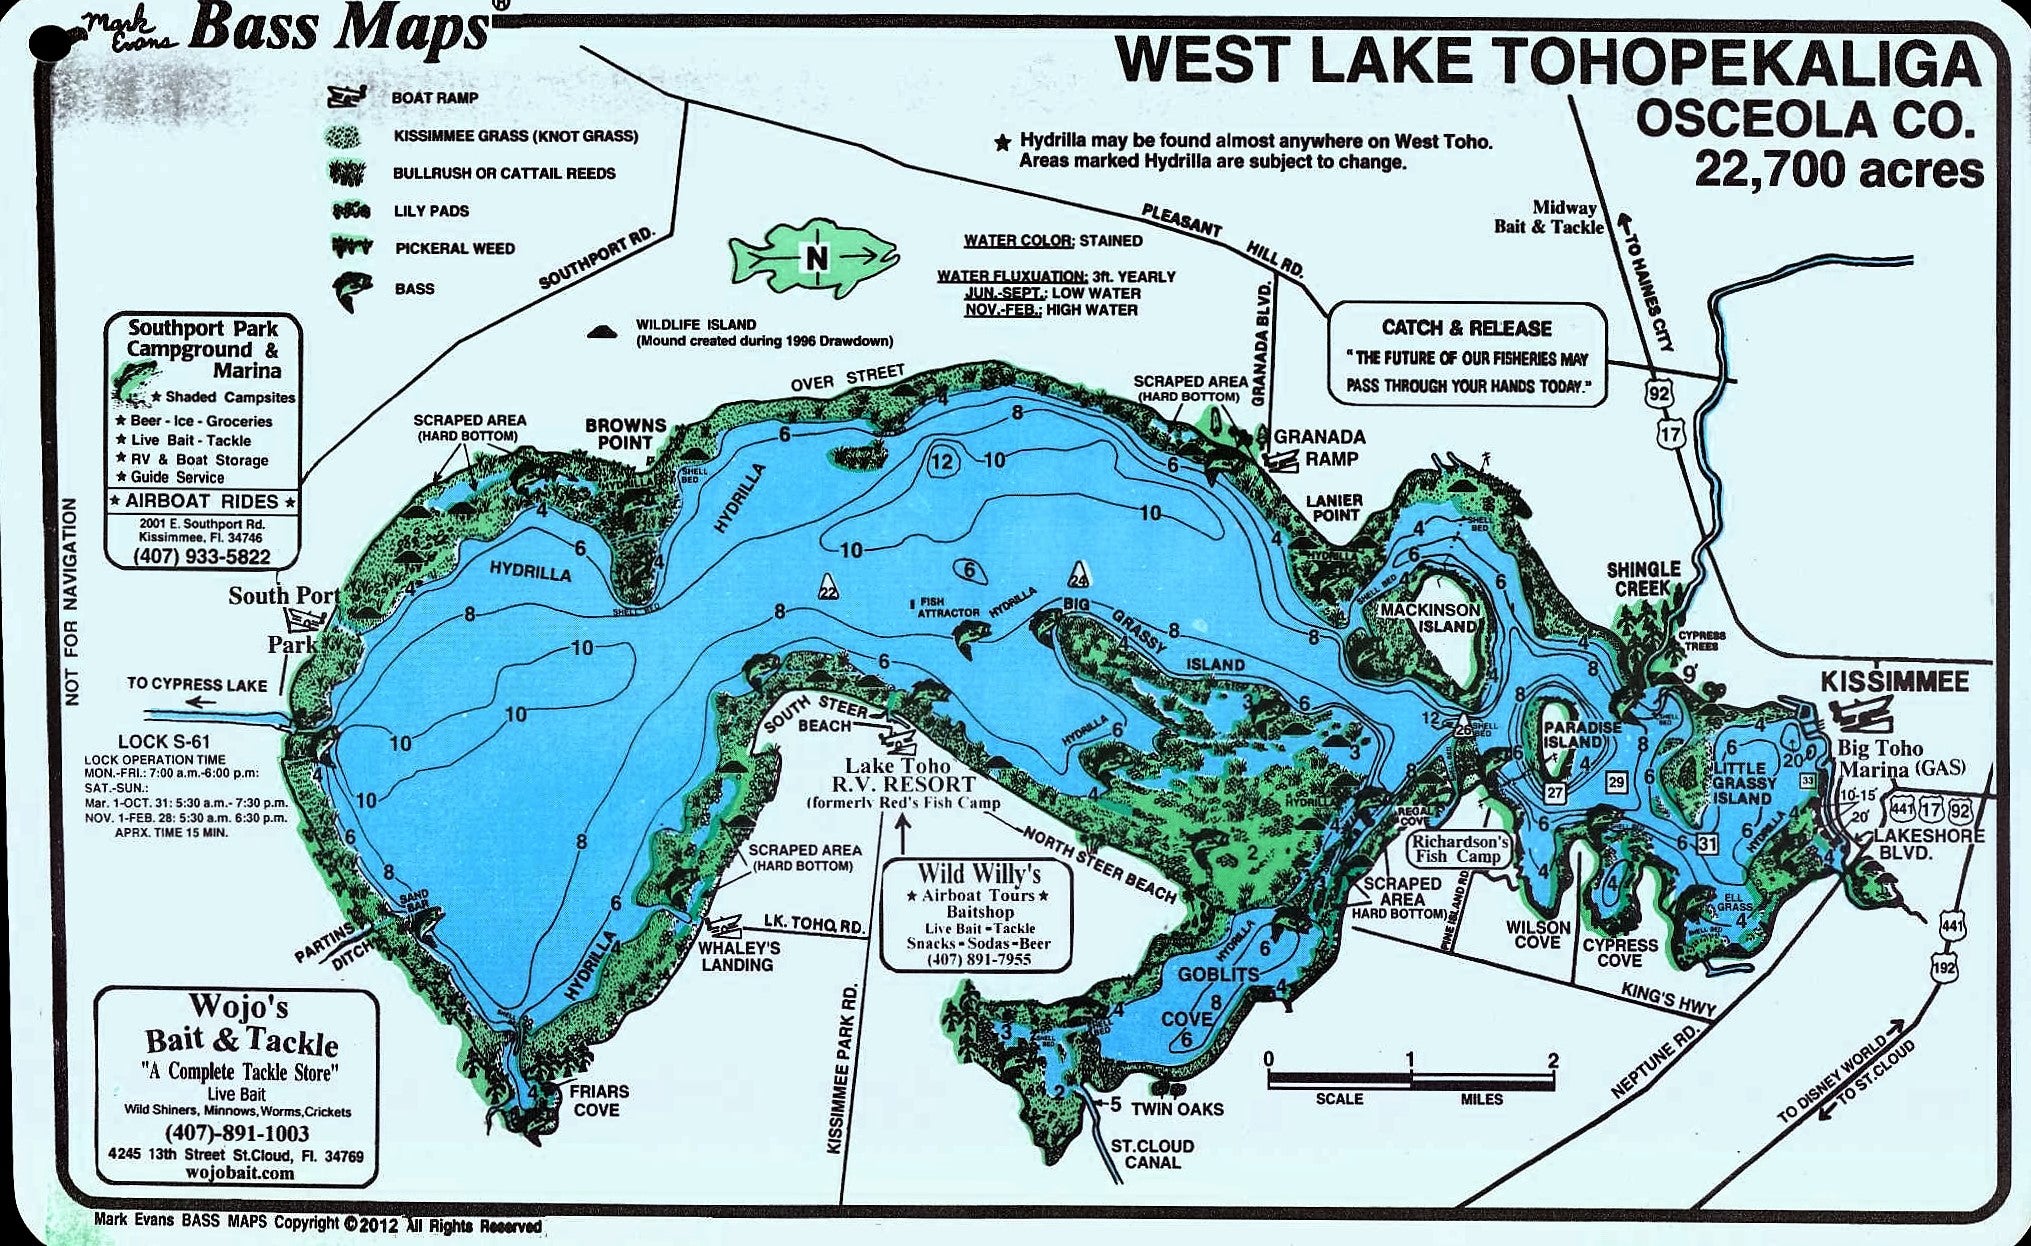 West Lake Toho Map of the Lake